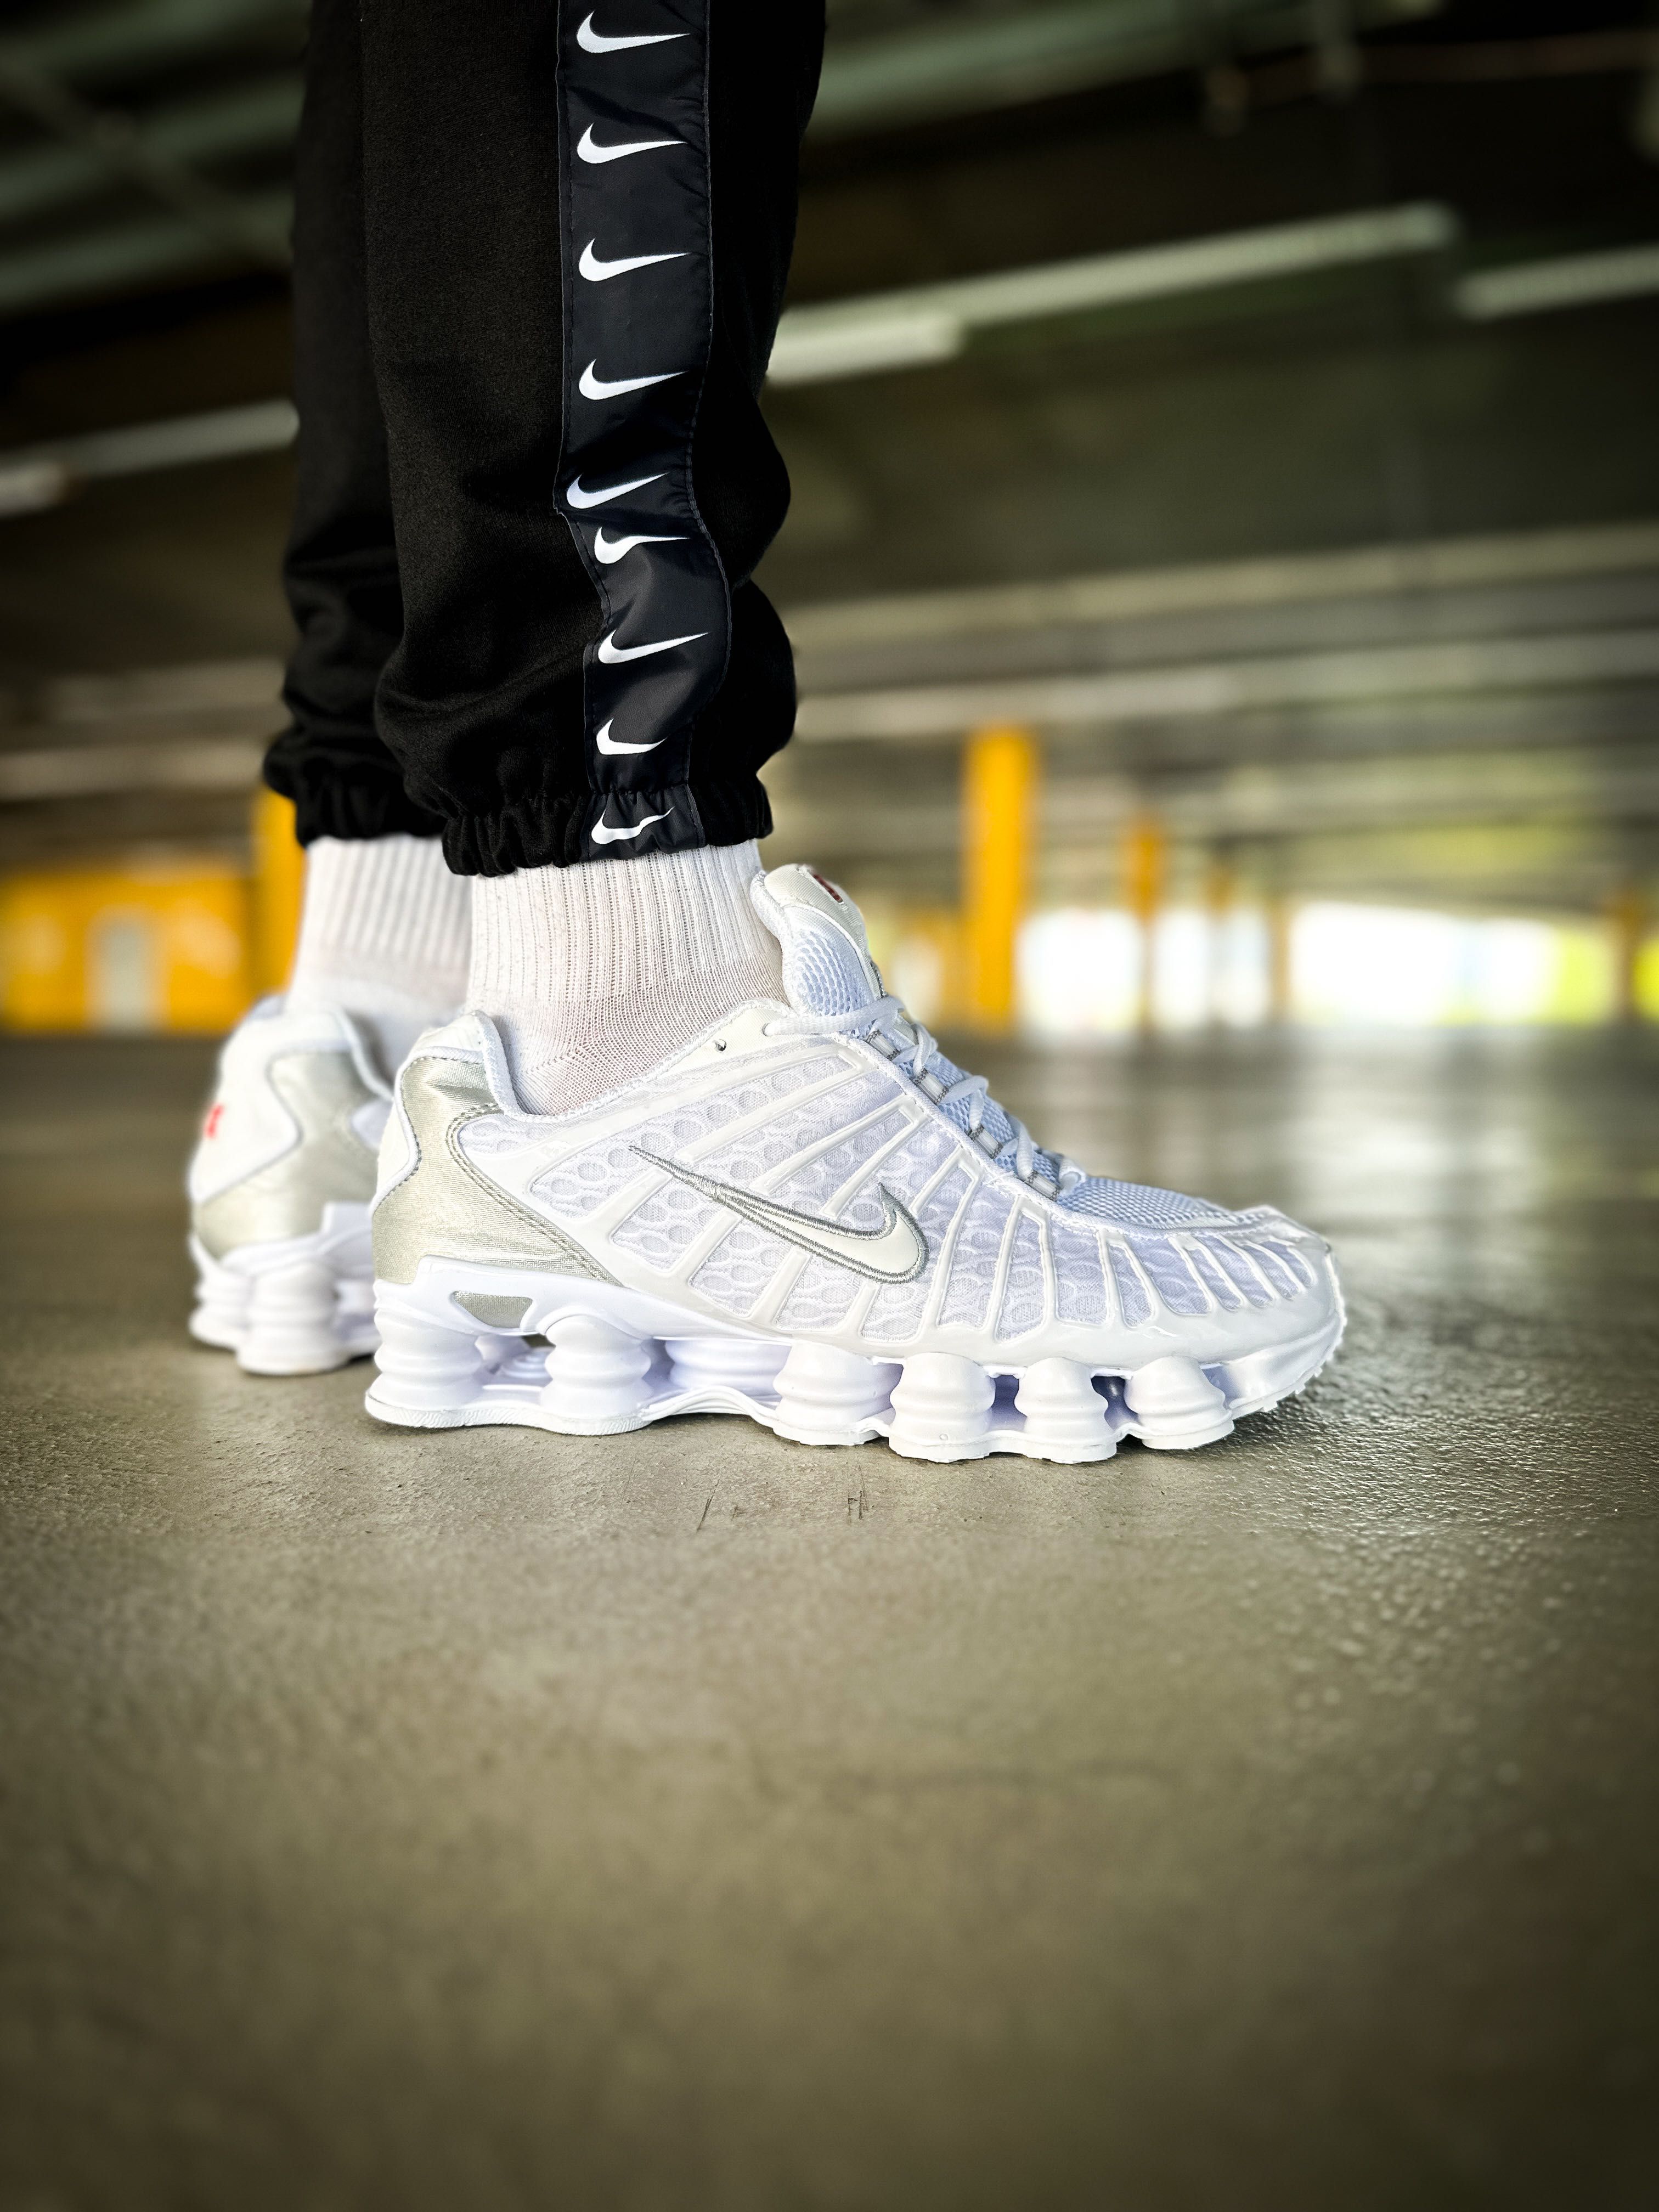 Мужские кроссовки Nike Shox TL "White" Размеры 41-45